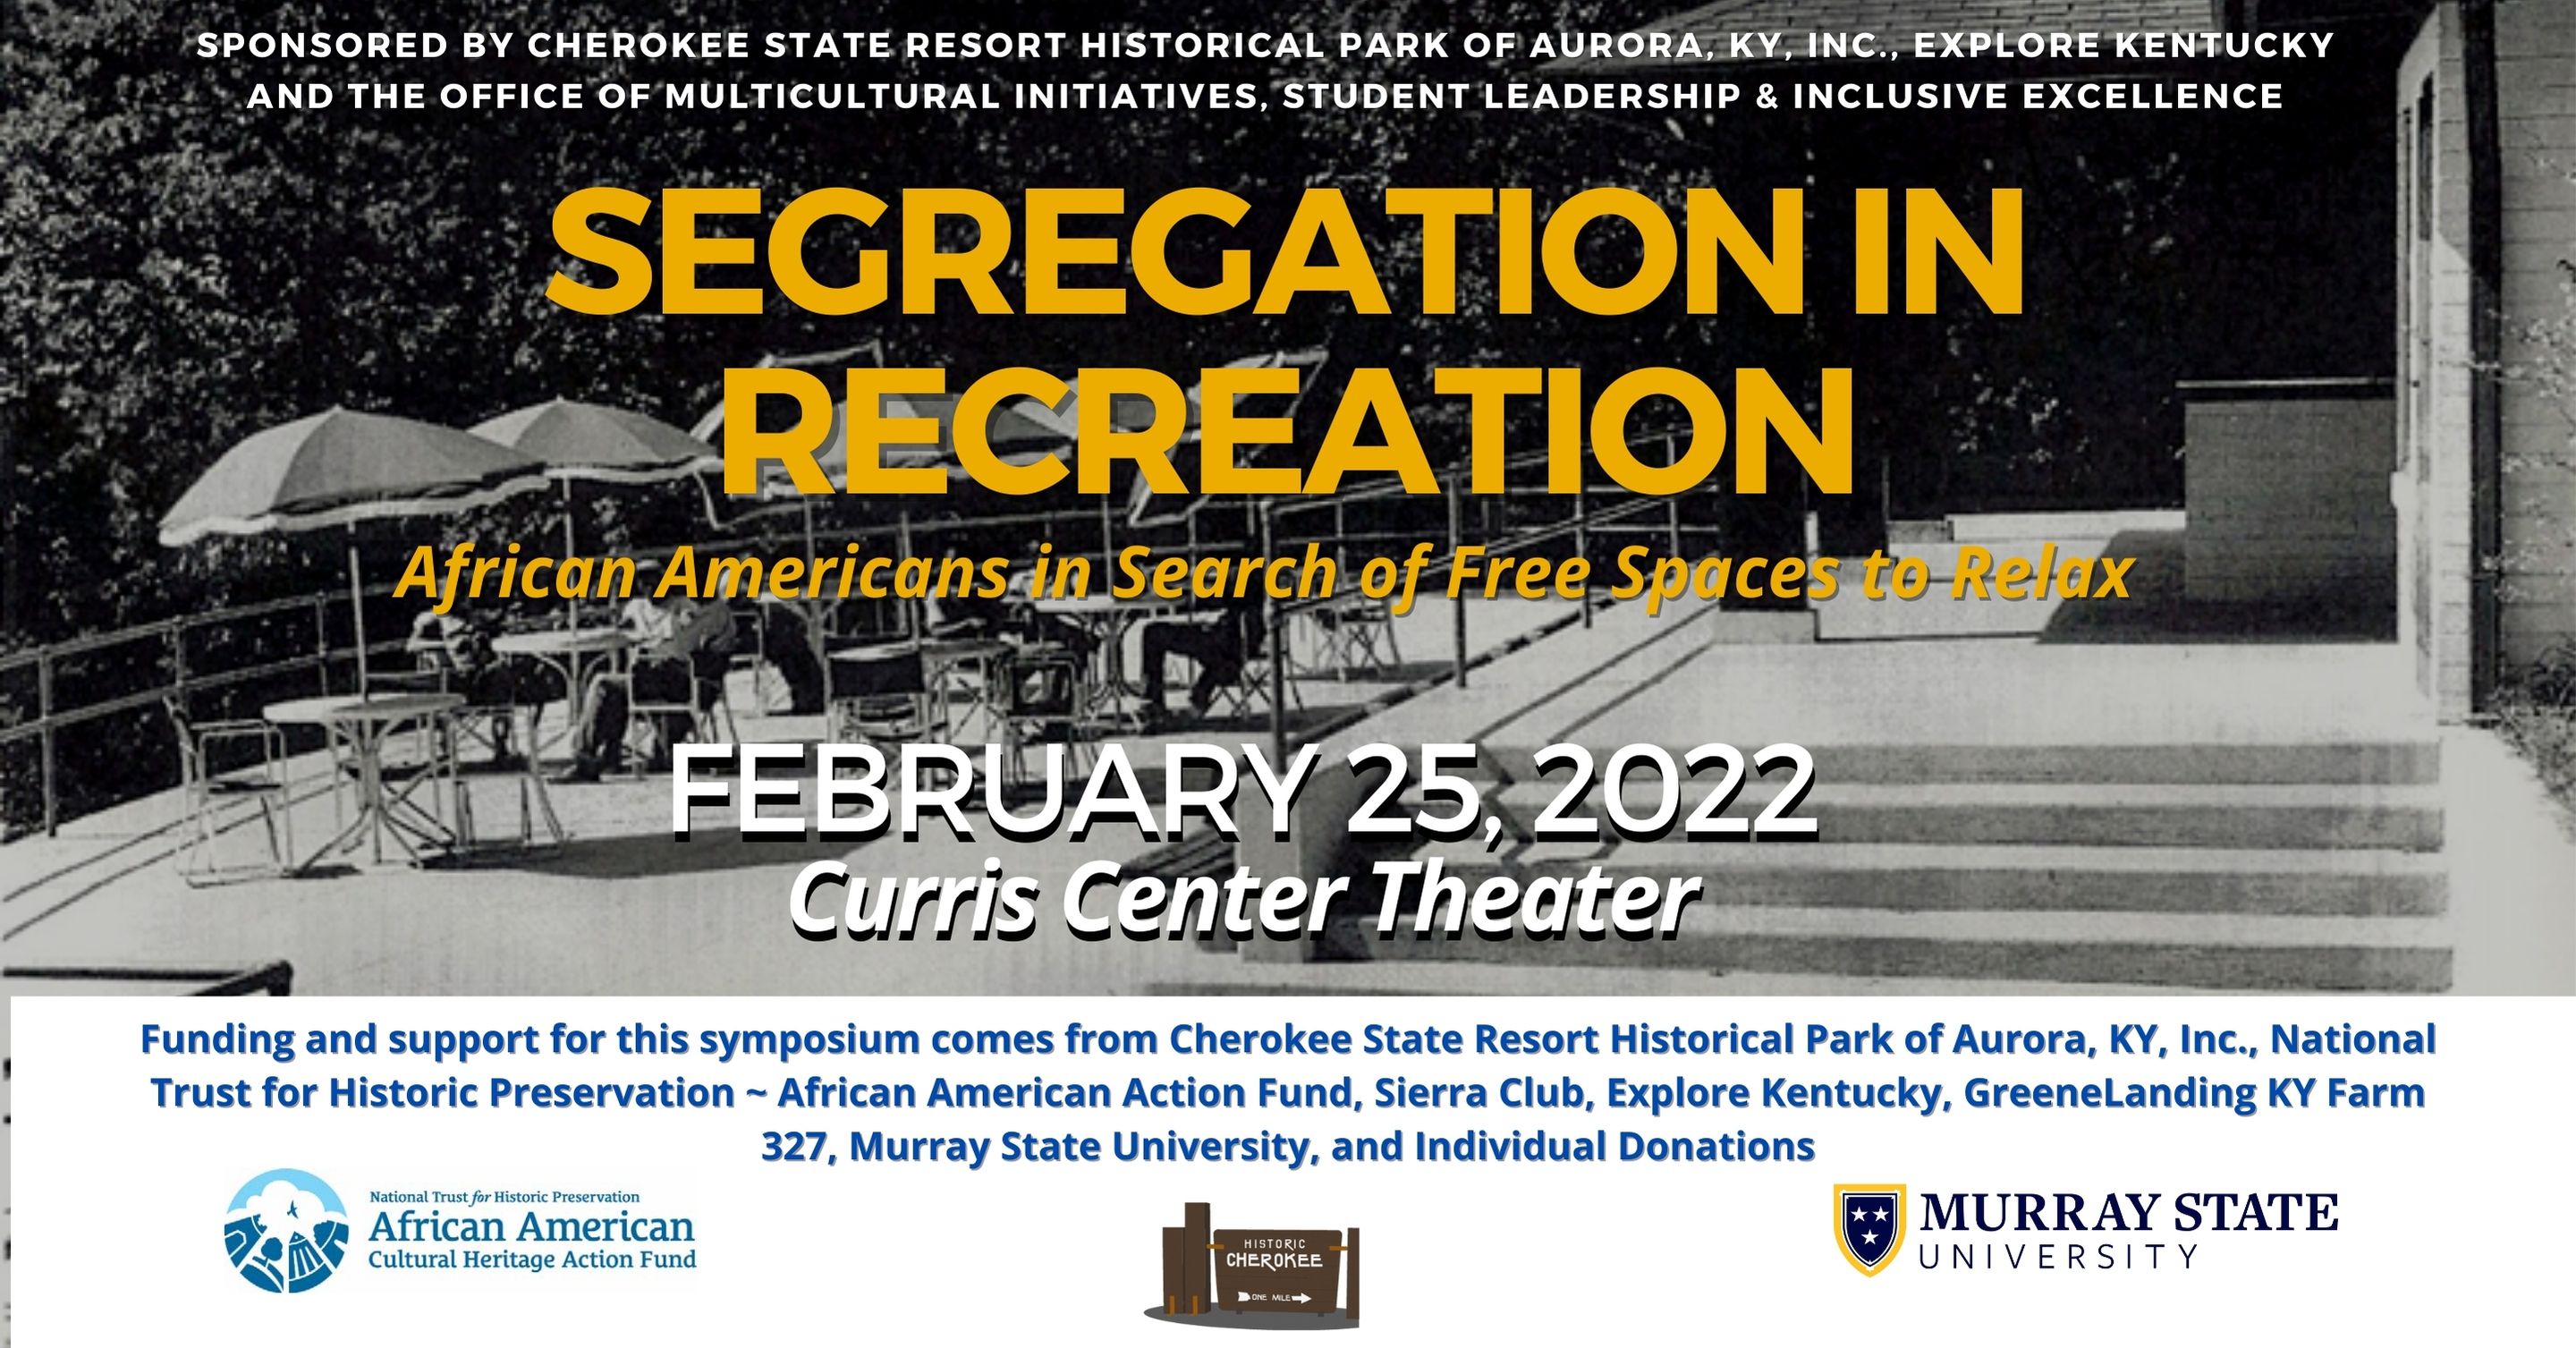 Segregation in Recreation flyer